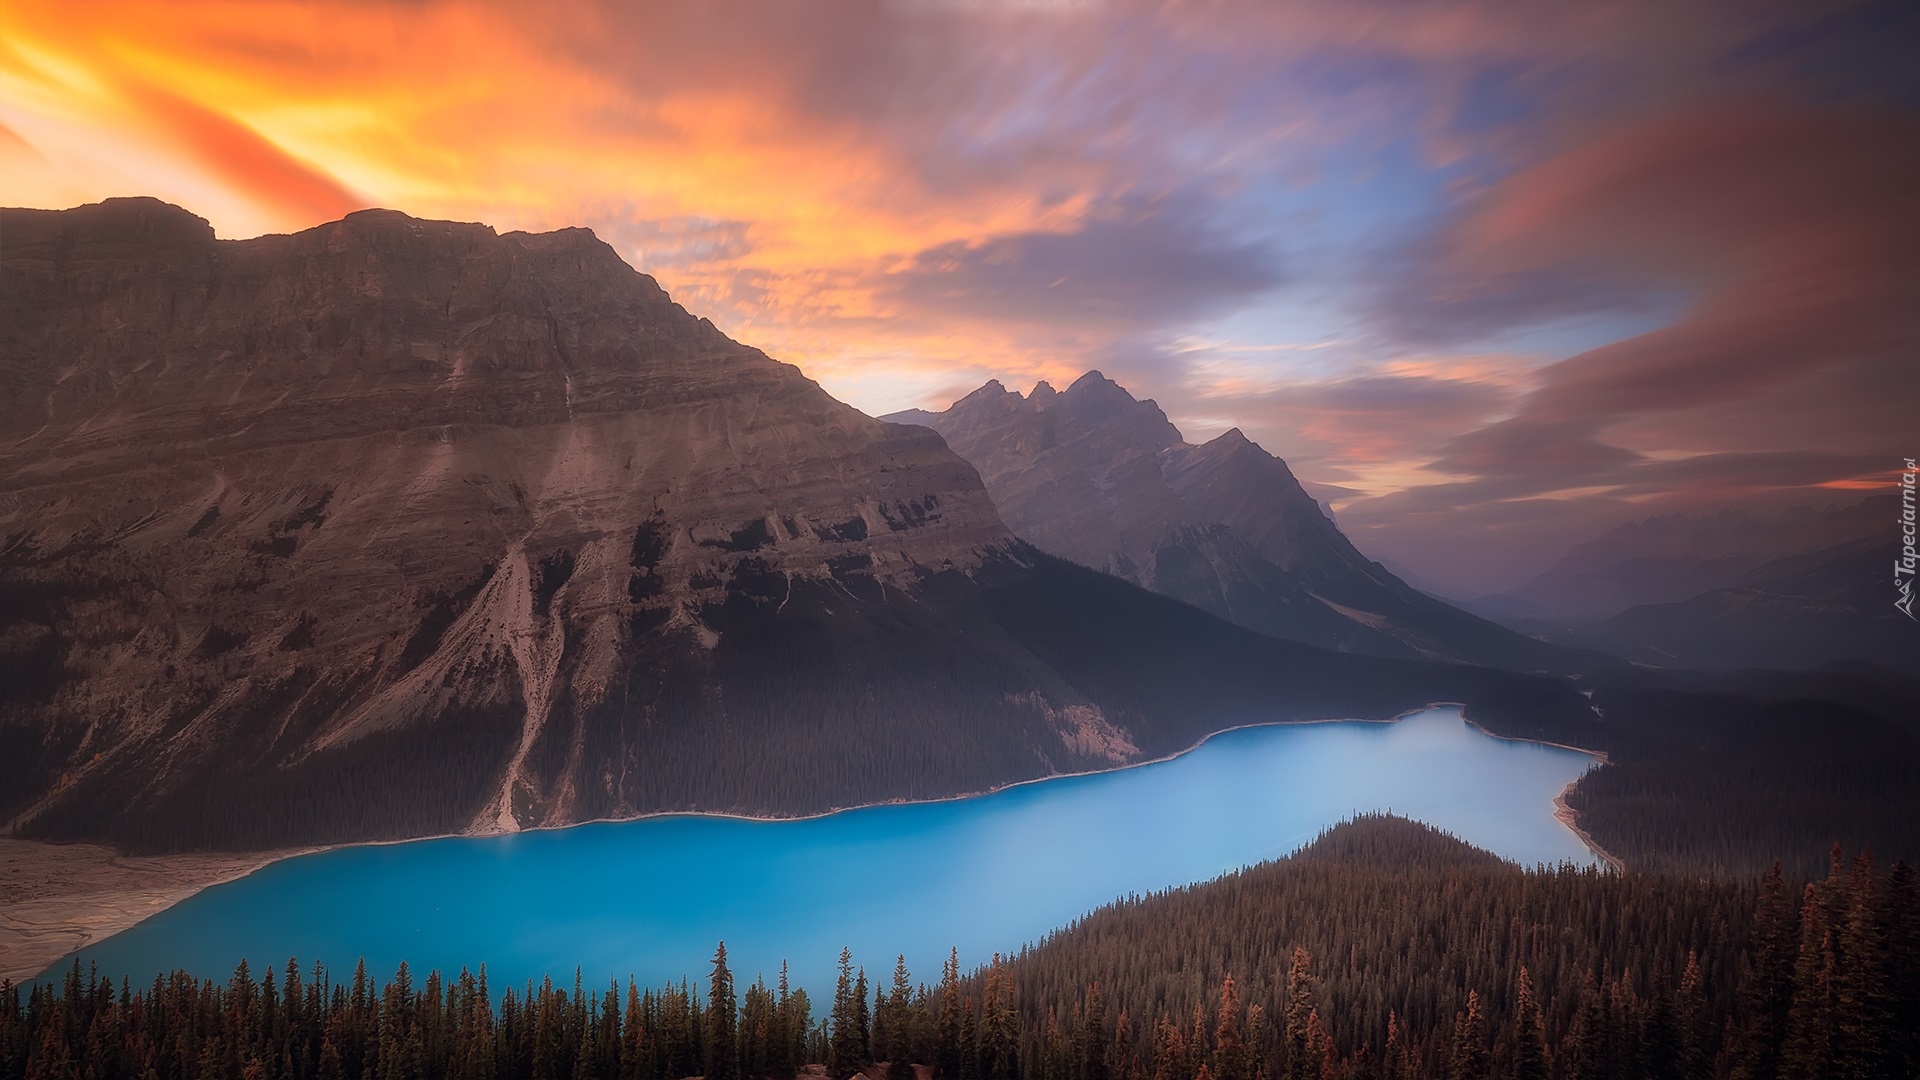 Park Narodowy Banff, Jezioro, Peyto Lake, Góry, Canadian Rockies, Lasy, Chmury, Alberta, Kanada